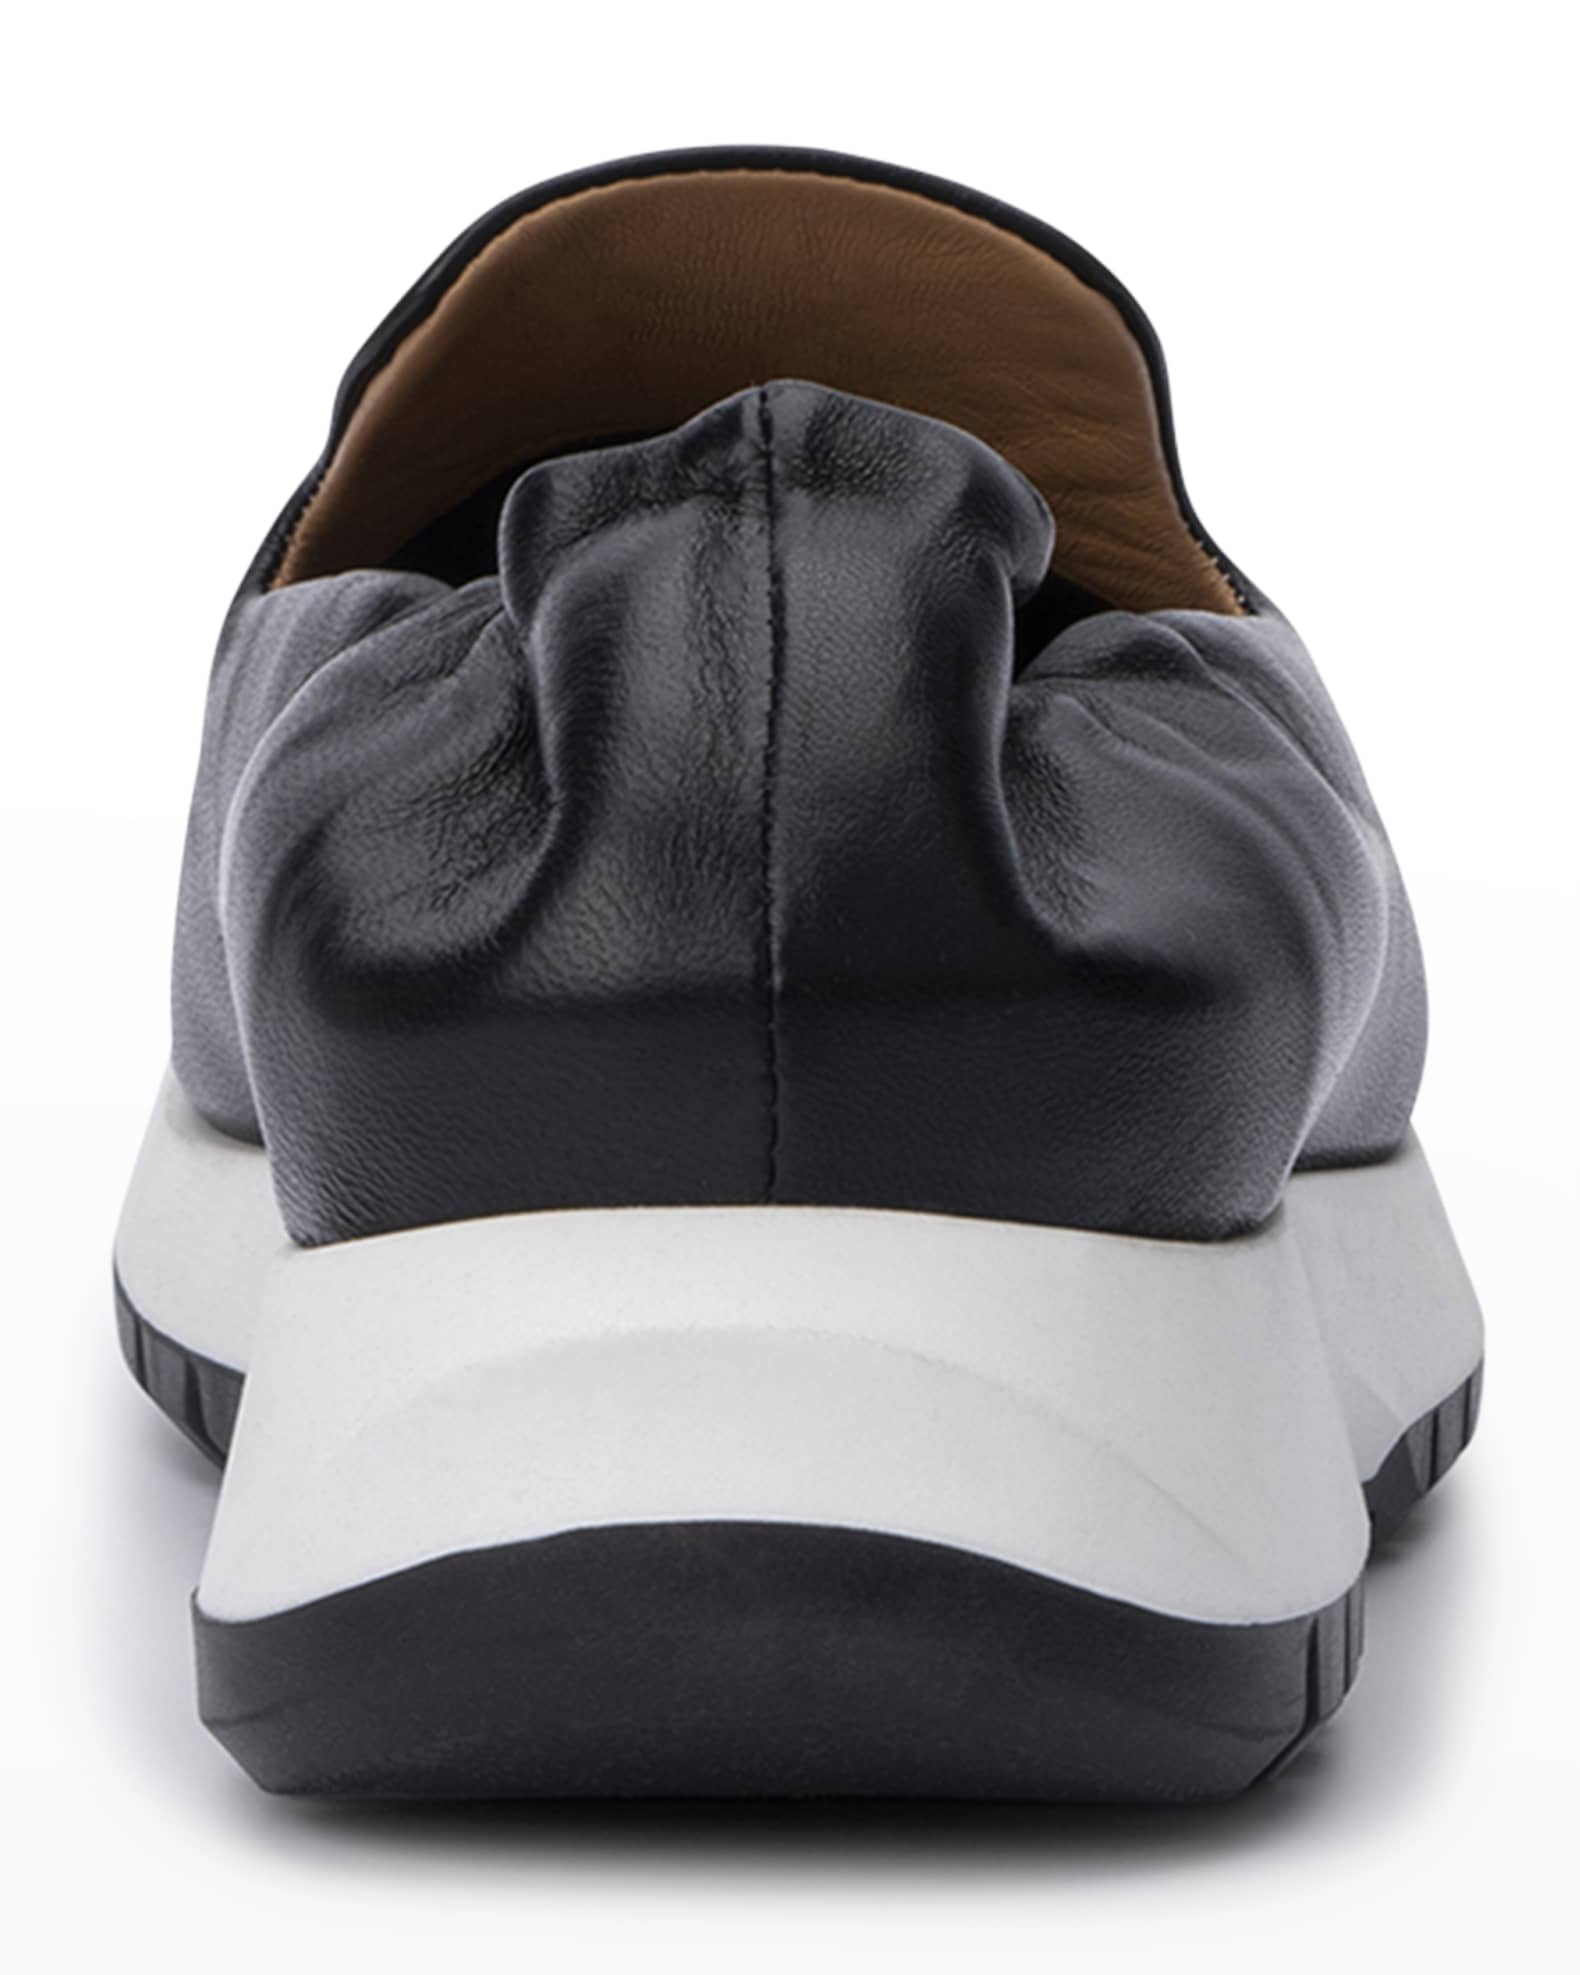 Aquatalia Keona Suede Sneaker Loafers | Neiman Marcus